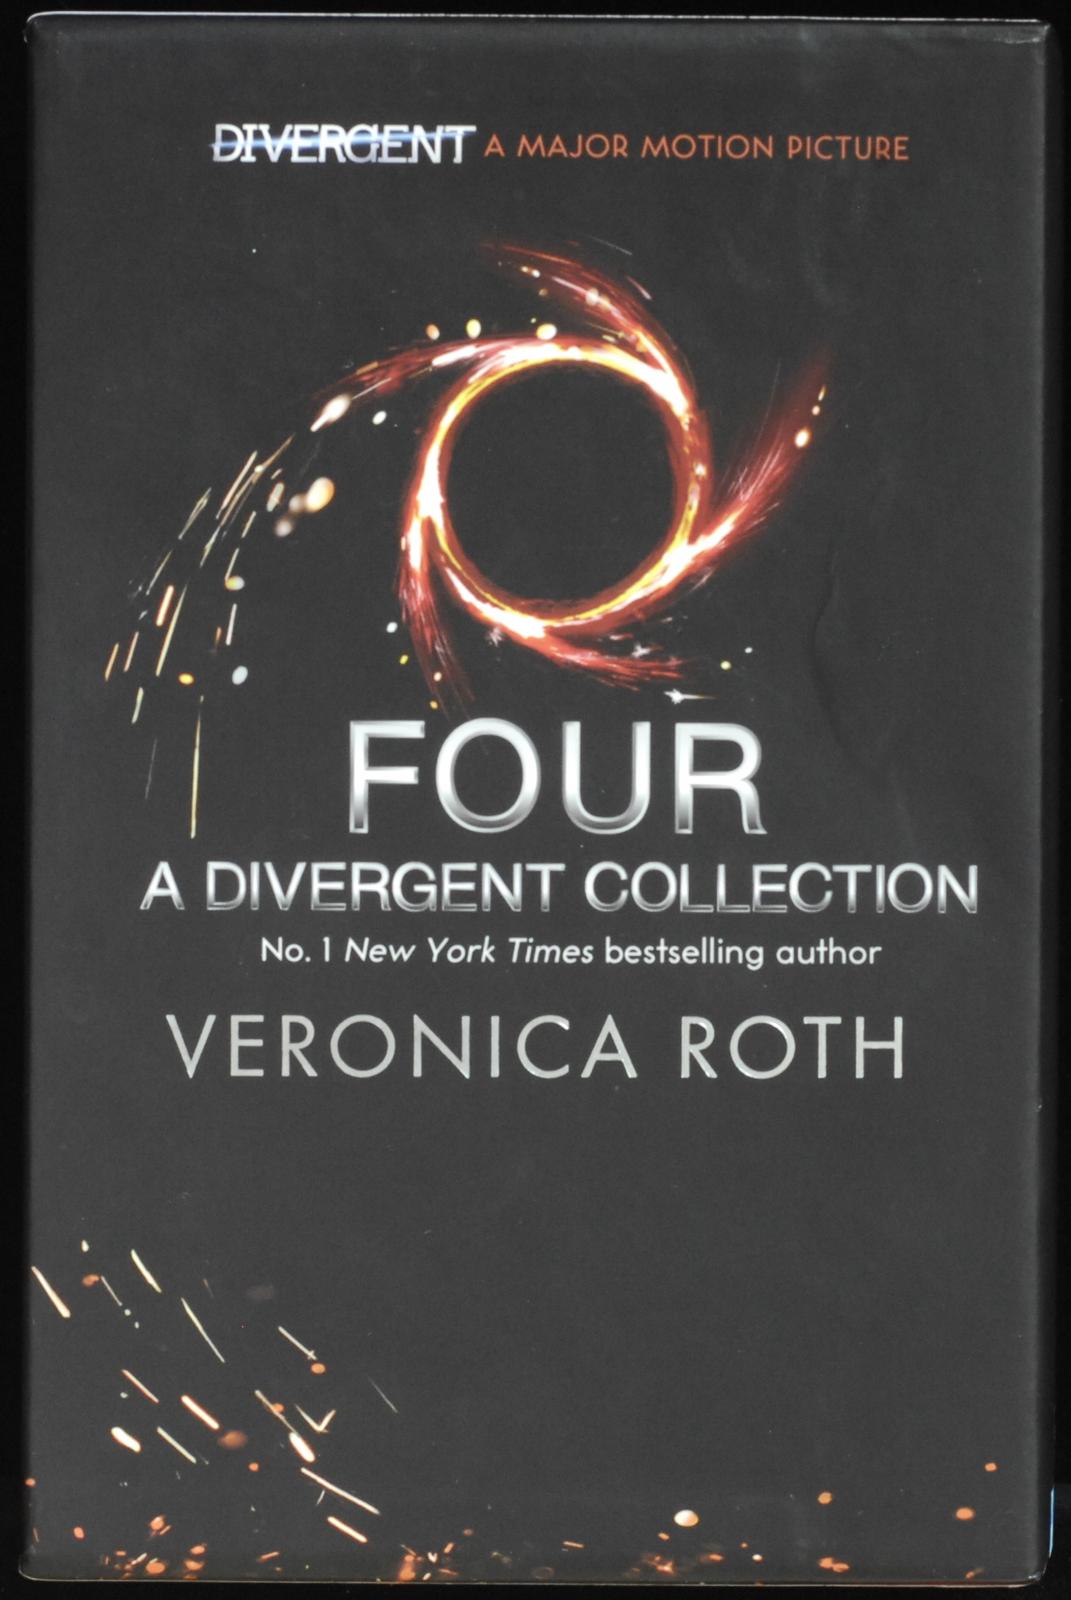 mbb006205b_-_Roth_Veronica_-_The_Divergent_Series.jpg